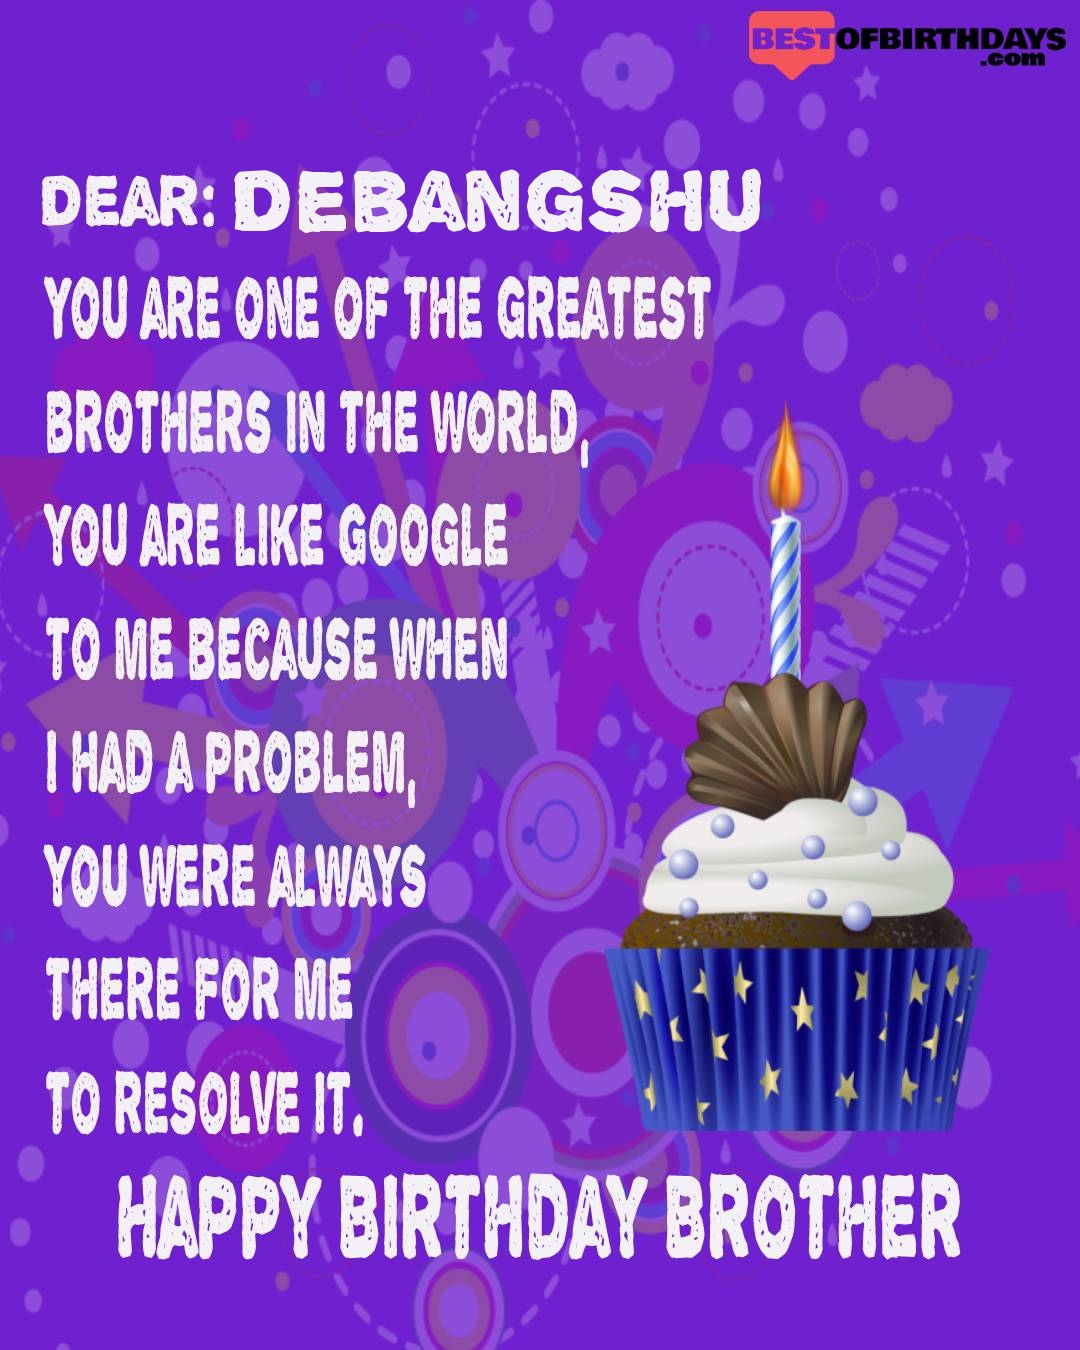 Happy birthday debangshu bhai brother bro